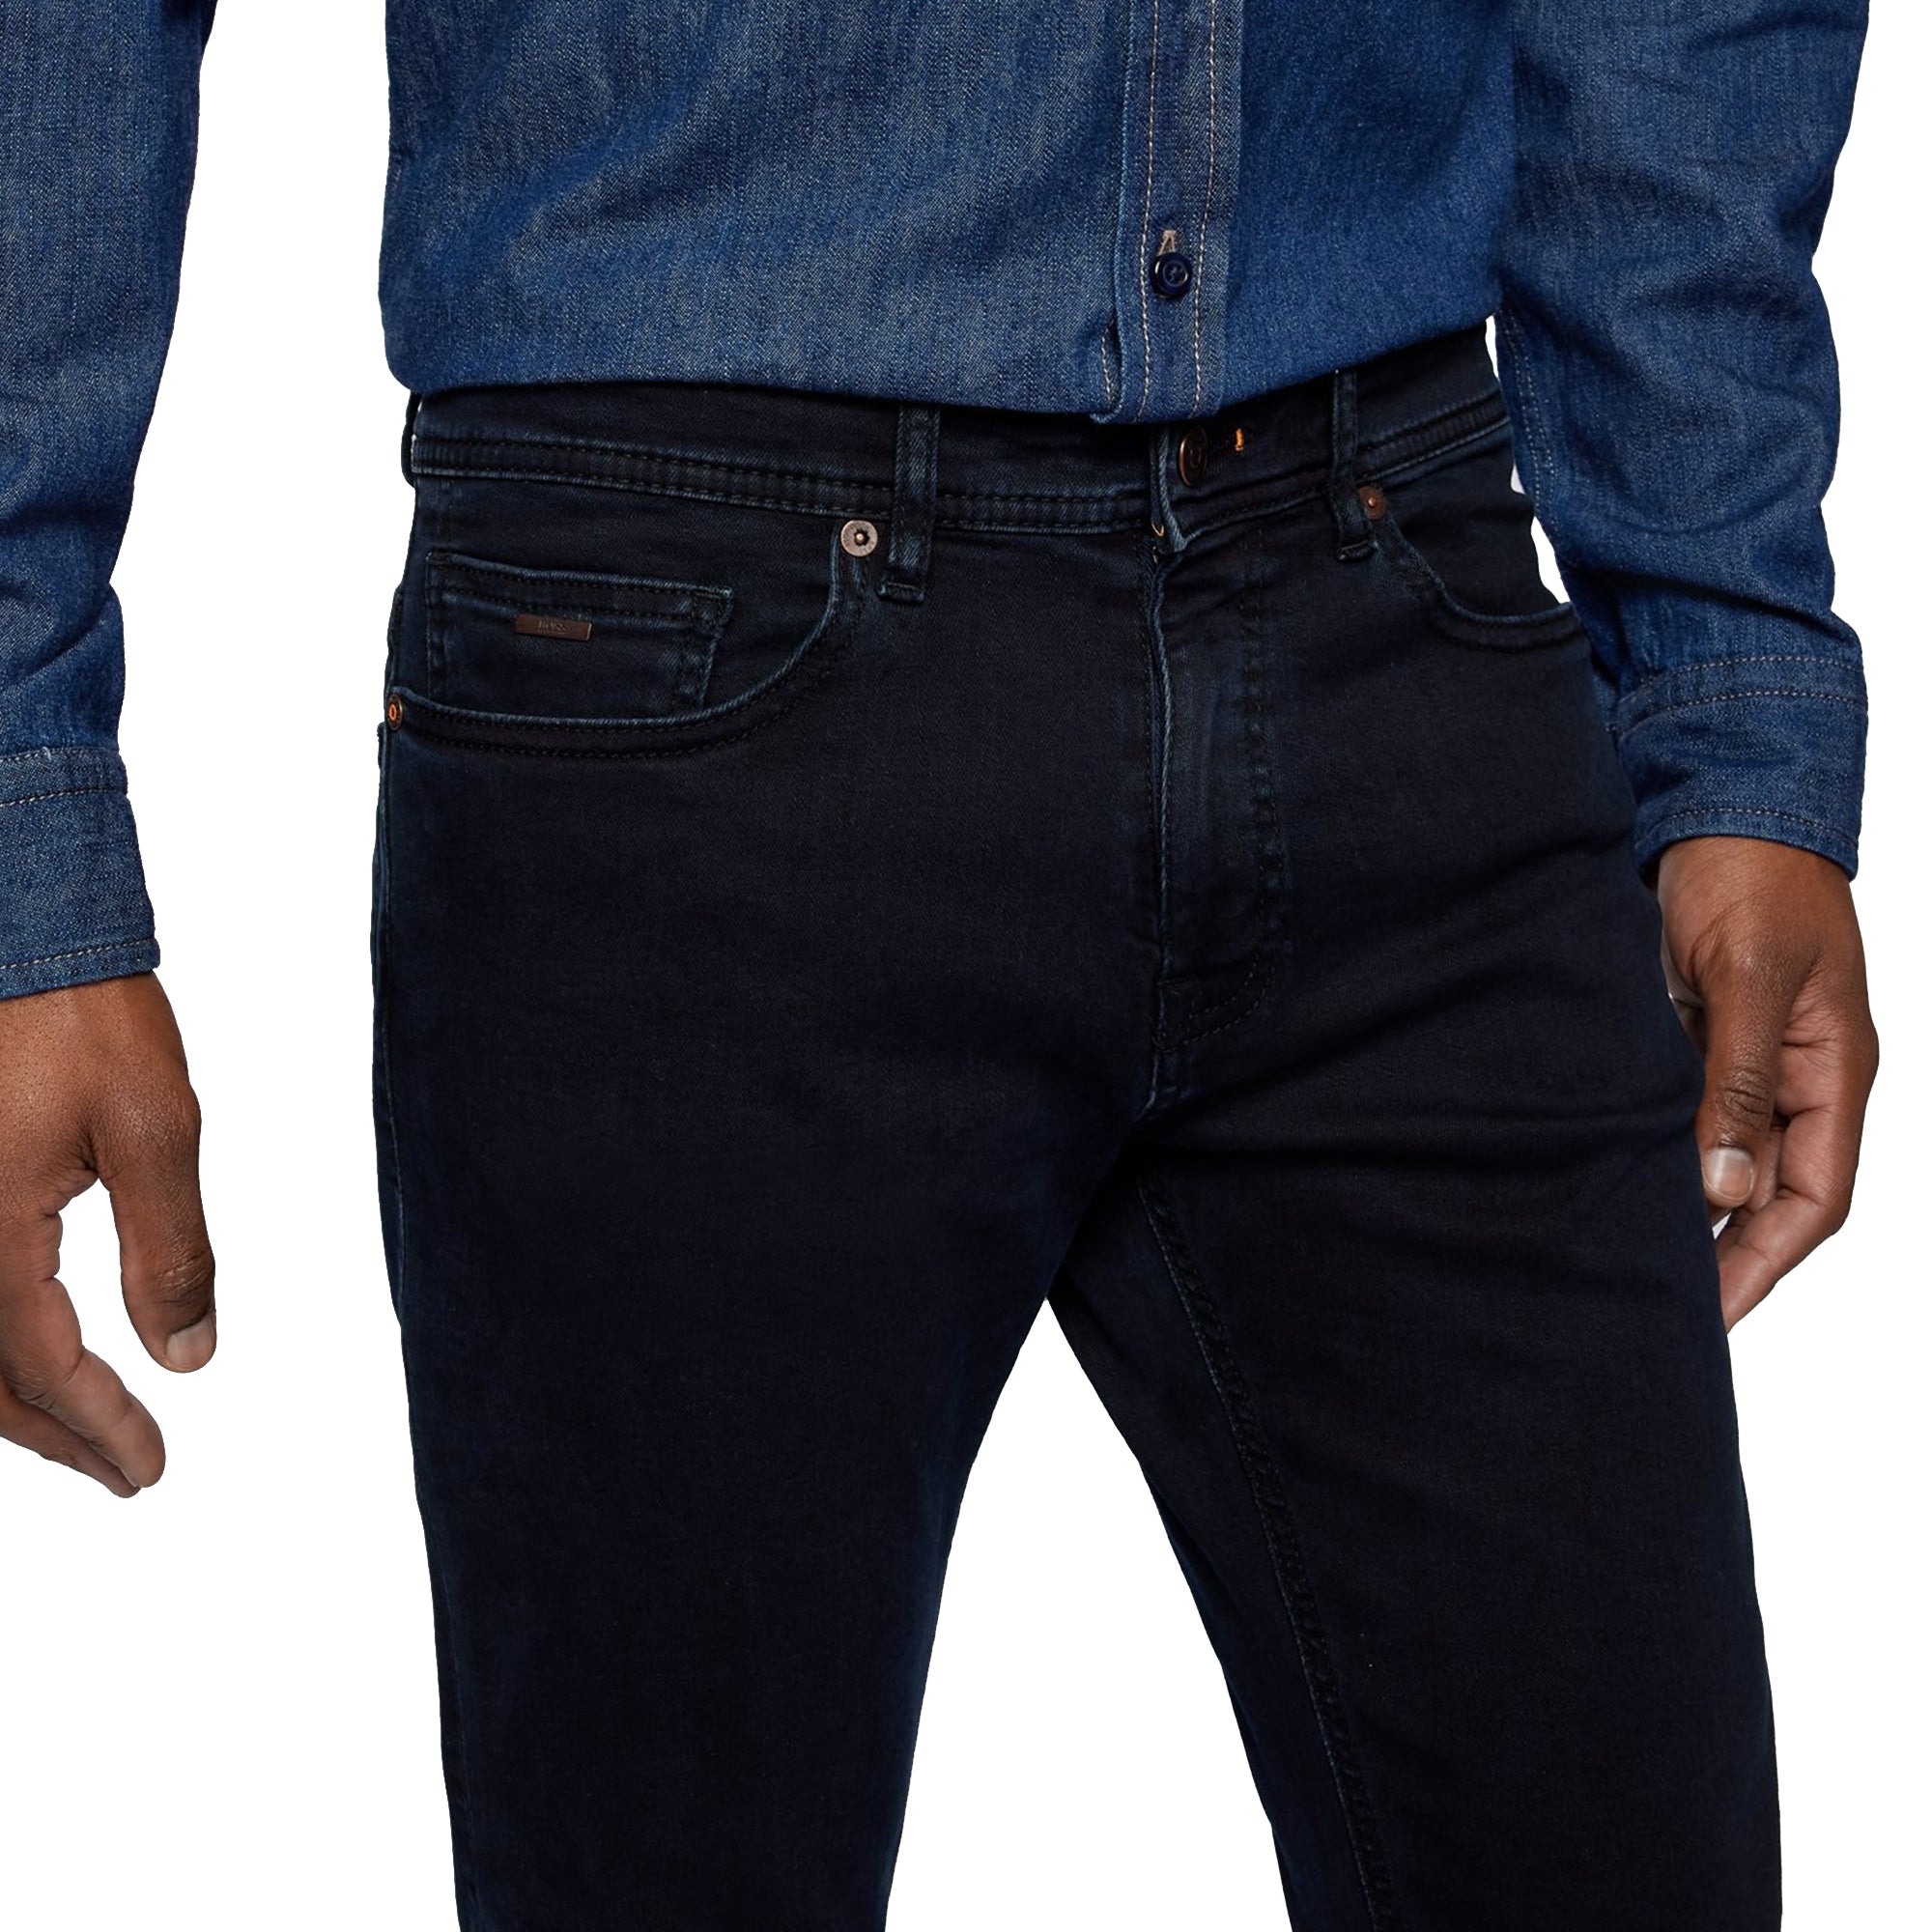 Boss Delaware Slim Fit Jeans - Dark Ink Blue Stretch